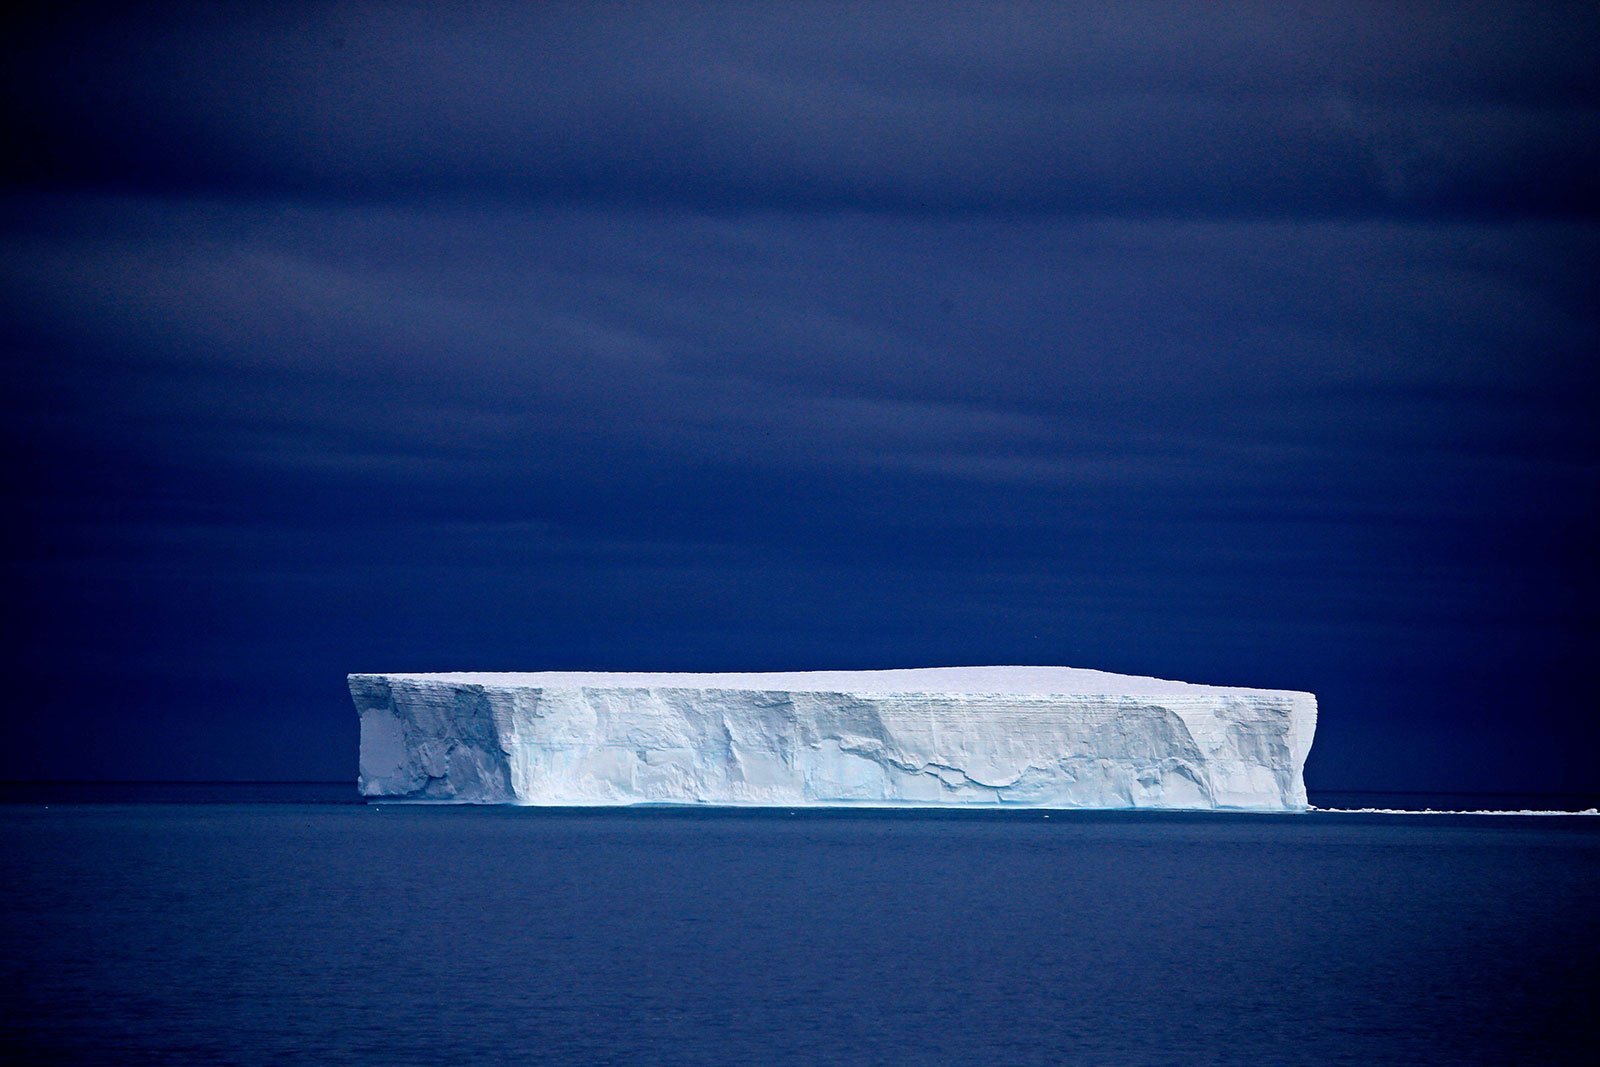 Tabular iceberg - Photo credit: passenger: lijishan